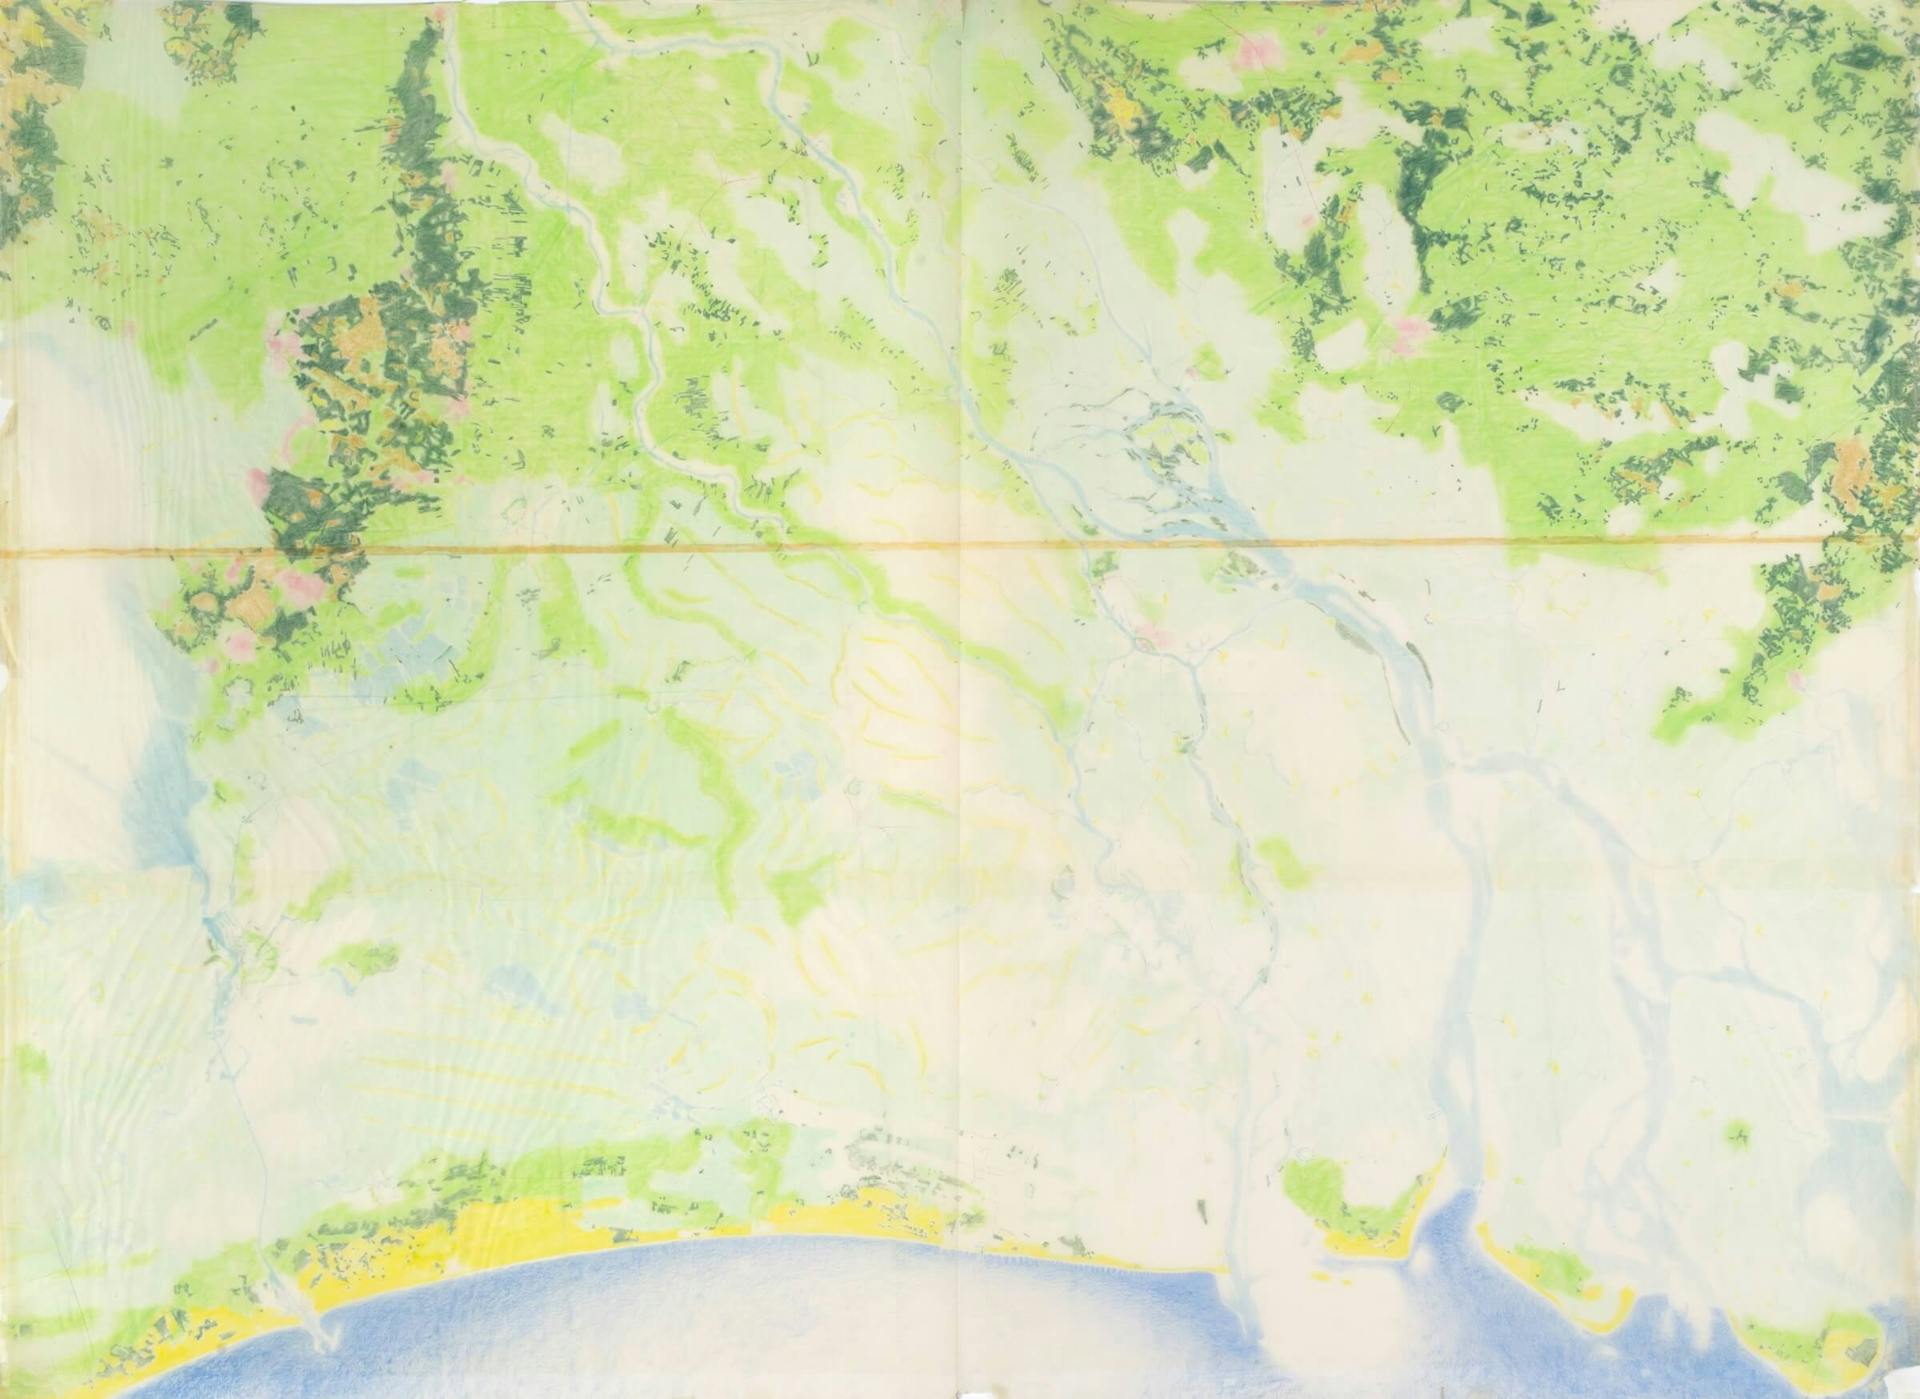 Pjotr Gonggrijp. Morphological studies of the Dutch delta landscape, 1969. Collection Het Nieuwe Instituut, GONG 3 